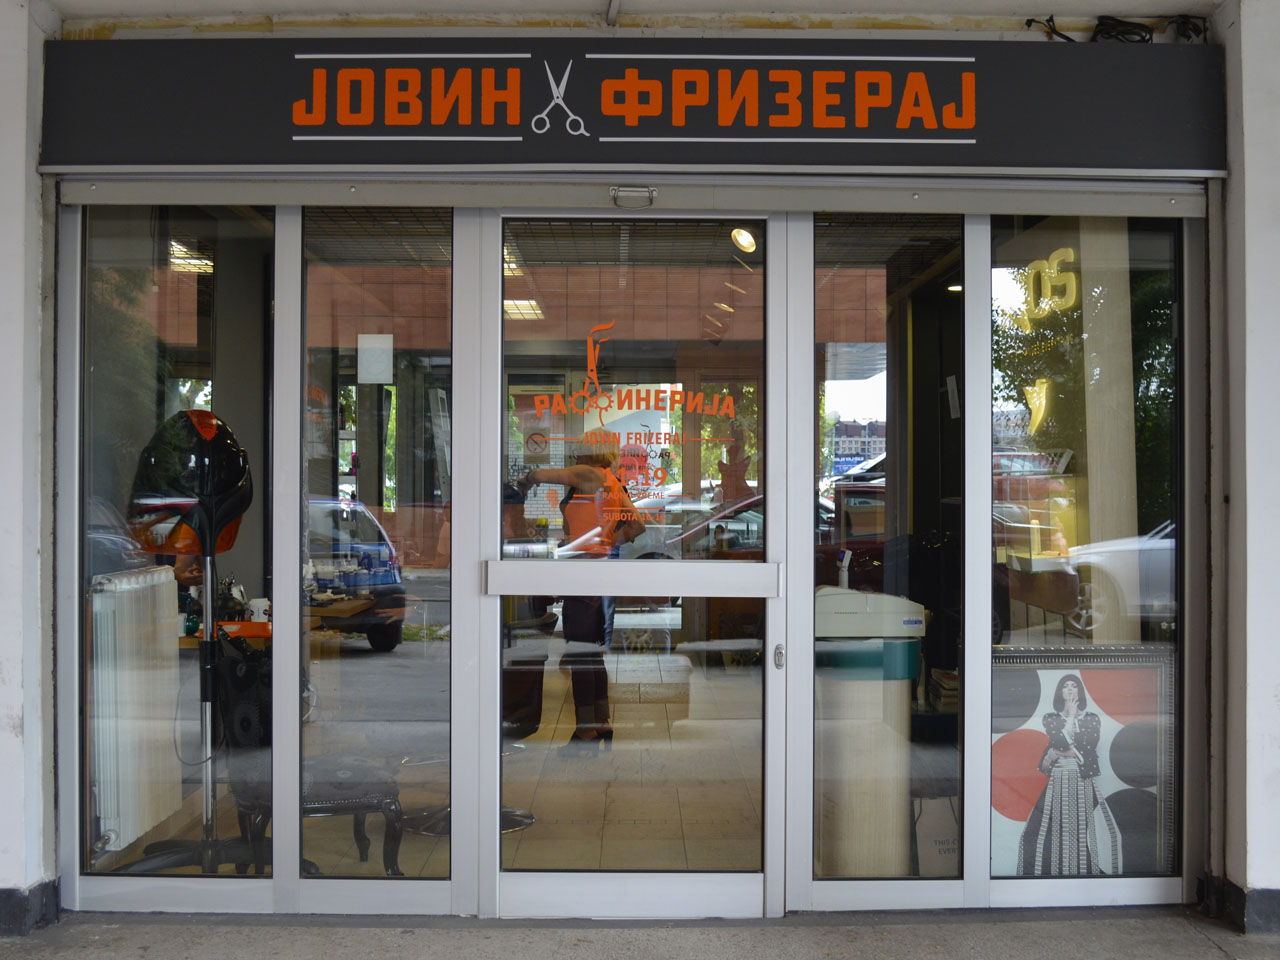 JOVAS HAIR SALON - REFINERY Hairdressers Belgrade - Photo 1